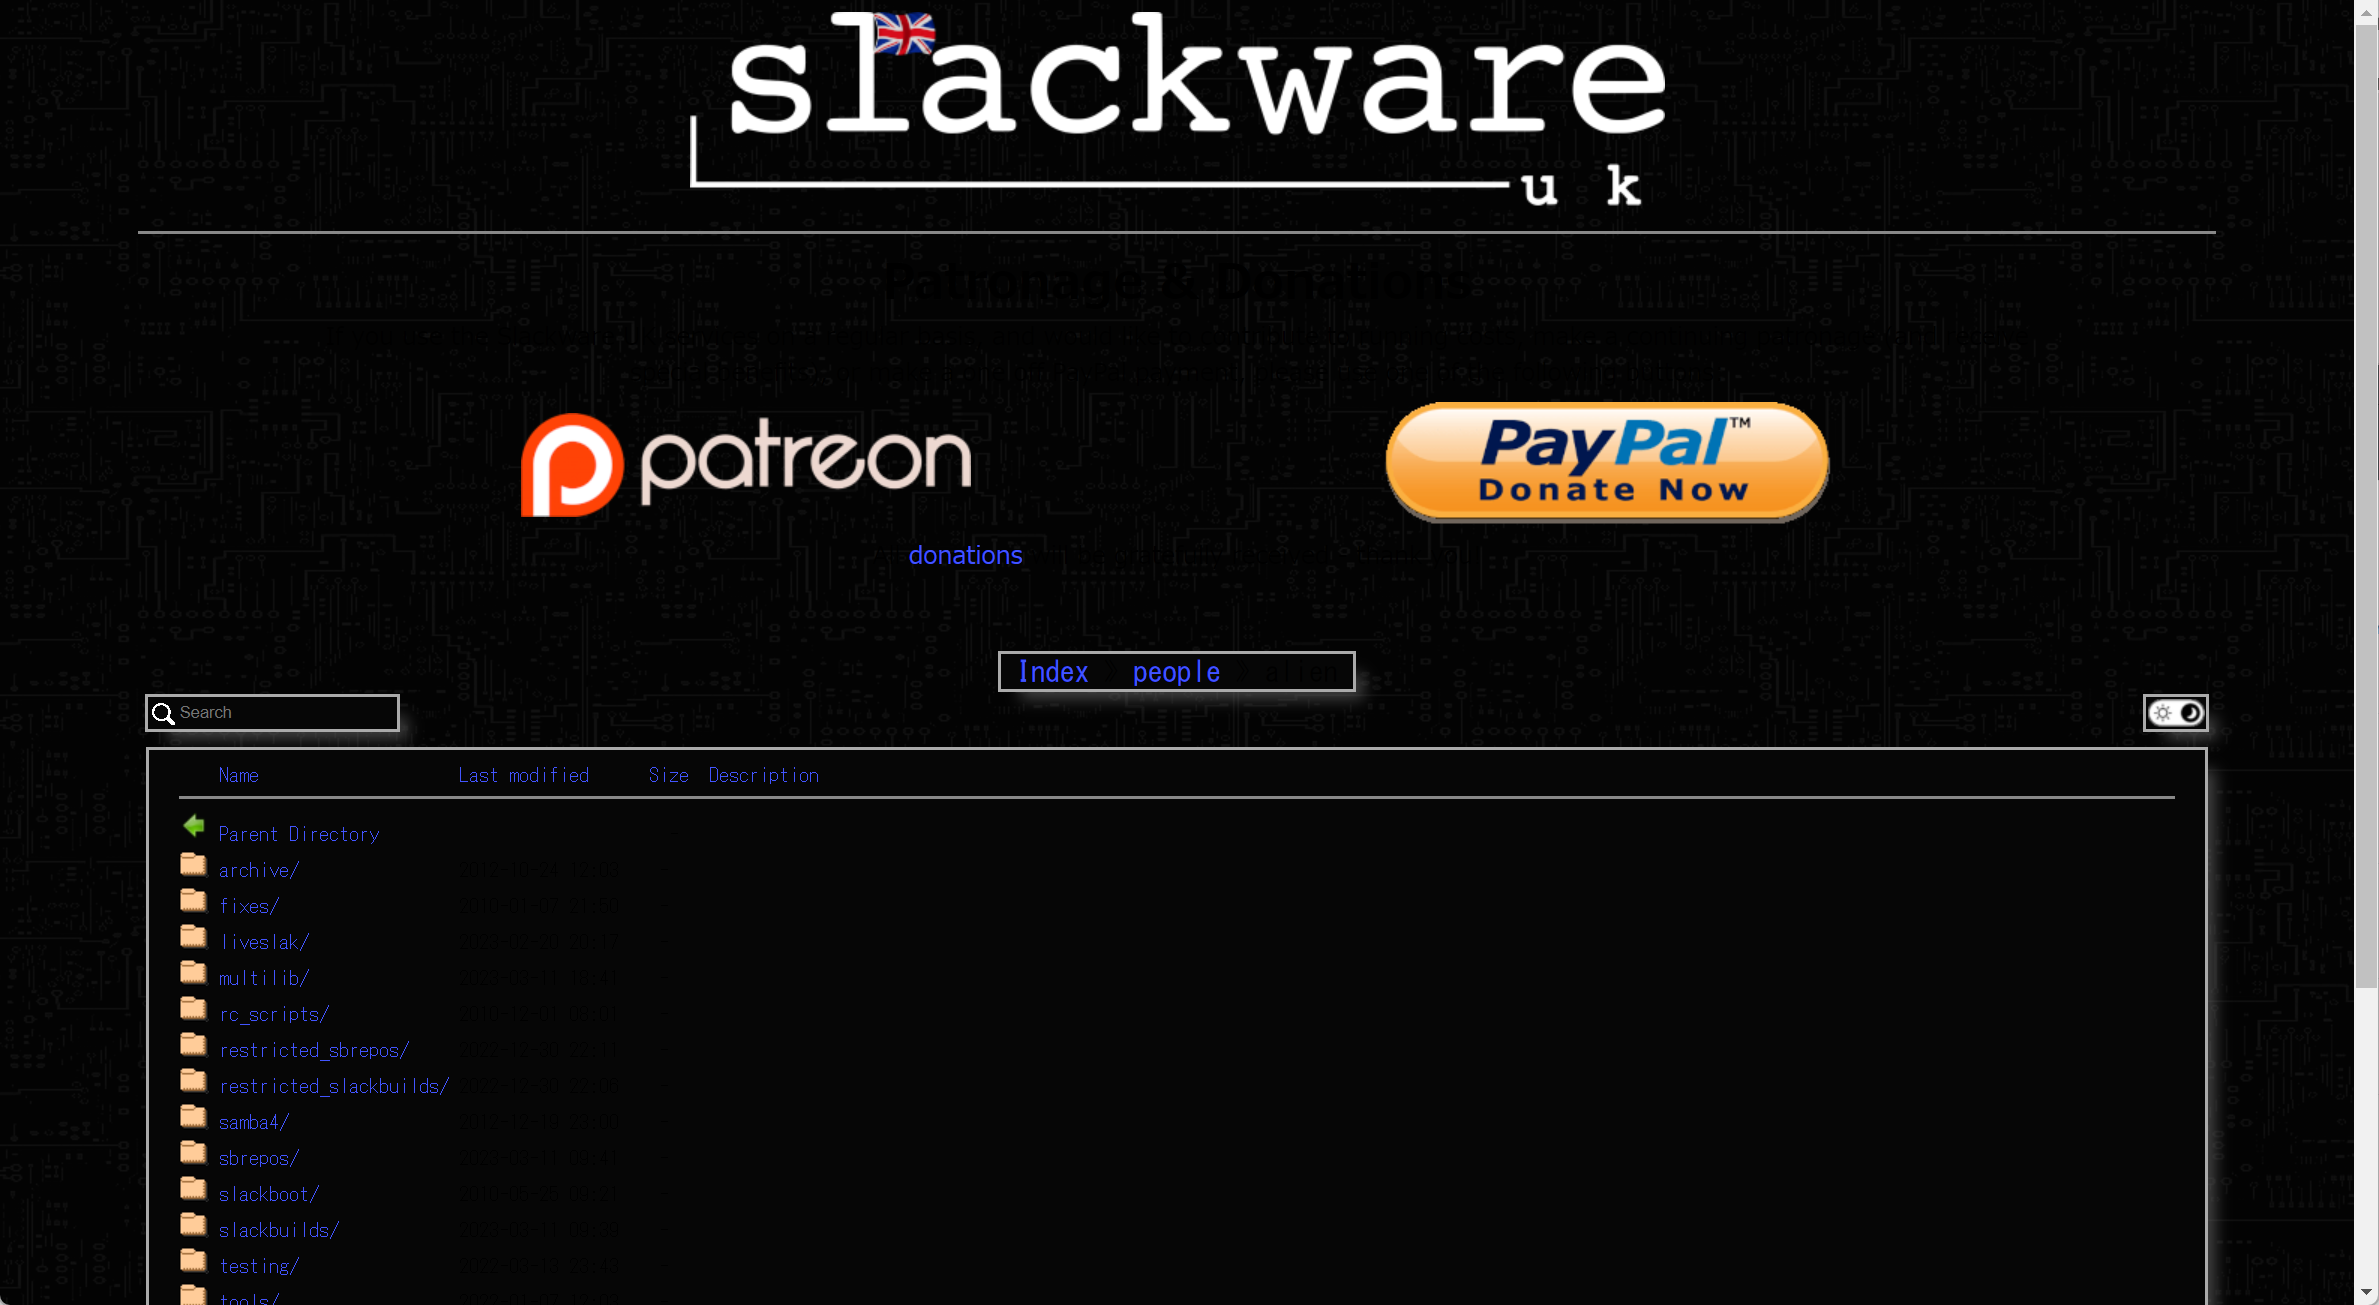 Slackware UK